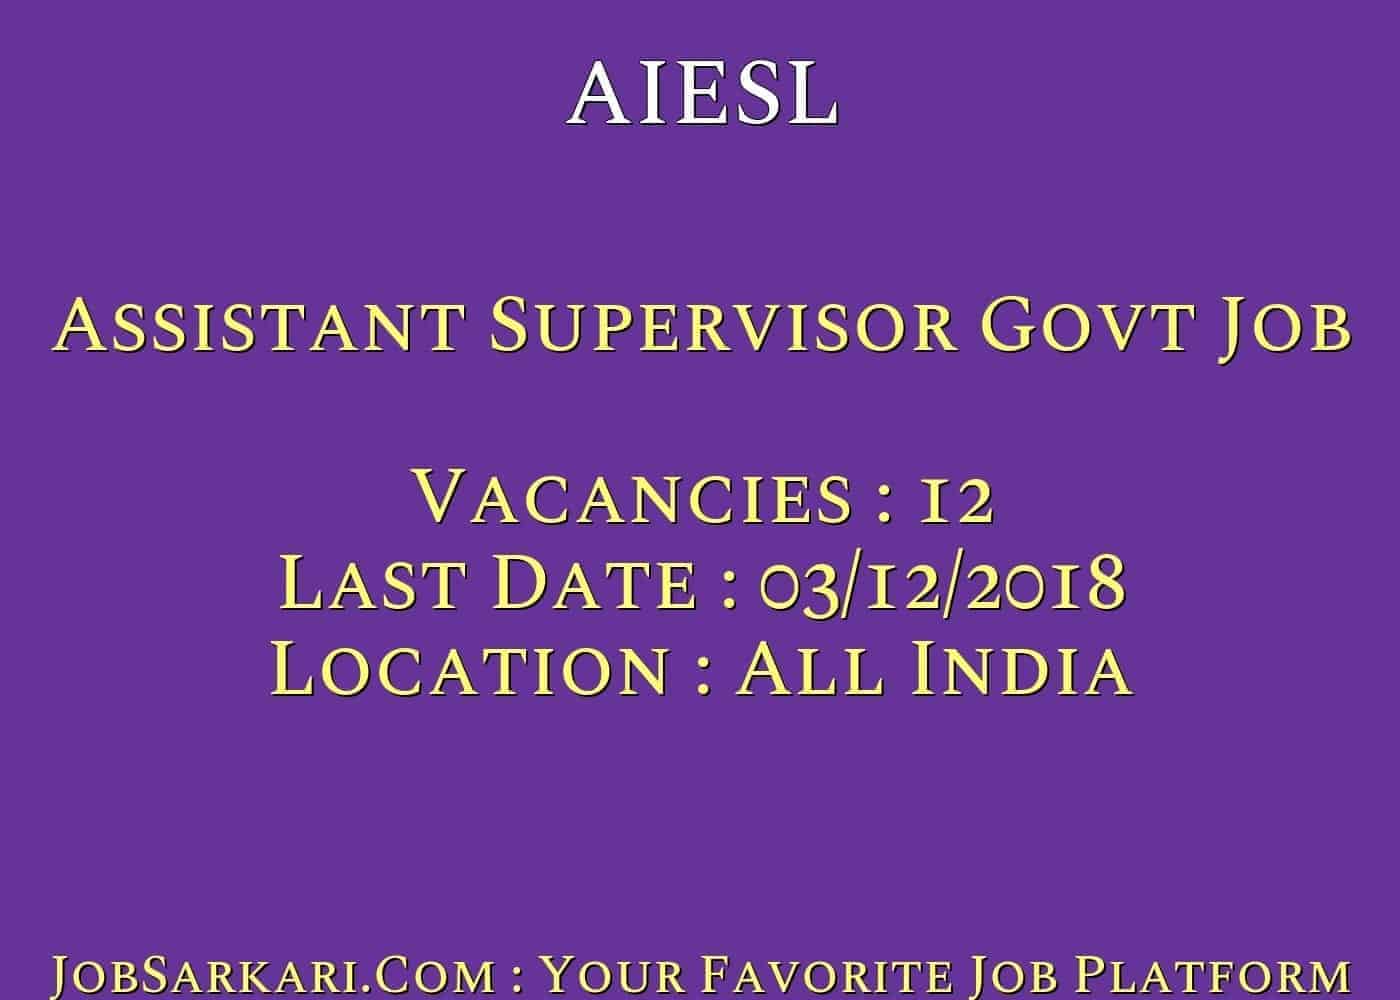 AIESL Recruitment 2018 For Assistant Supervisor Govt Job